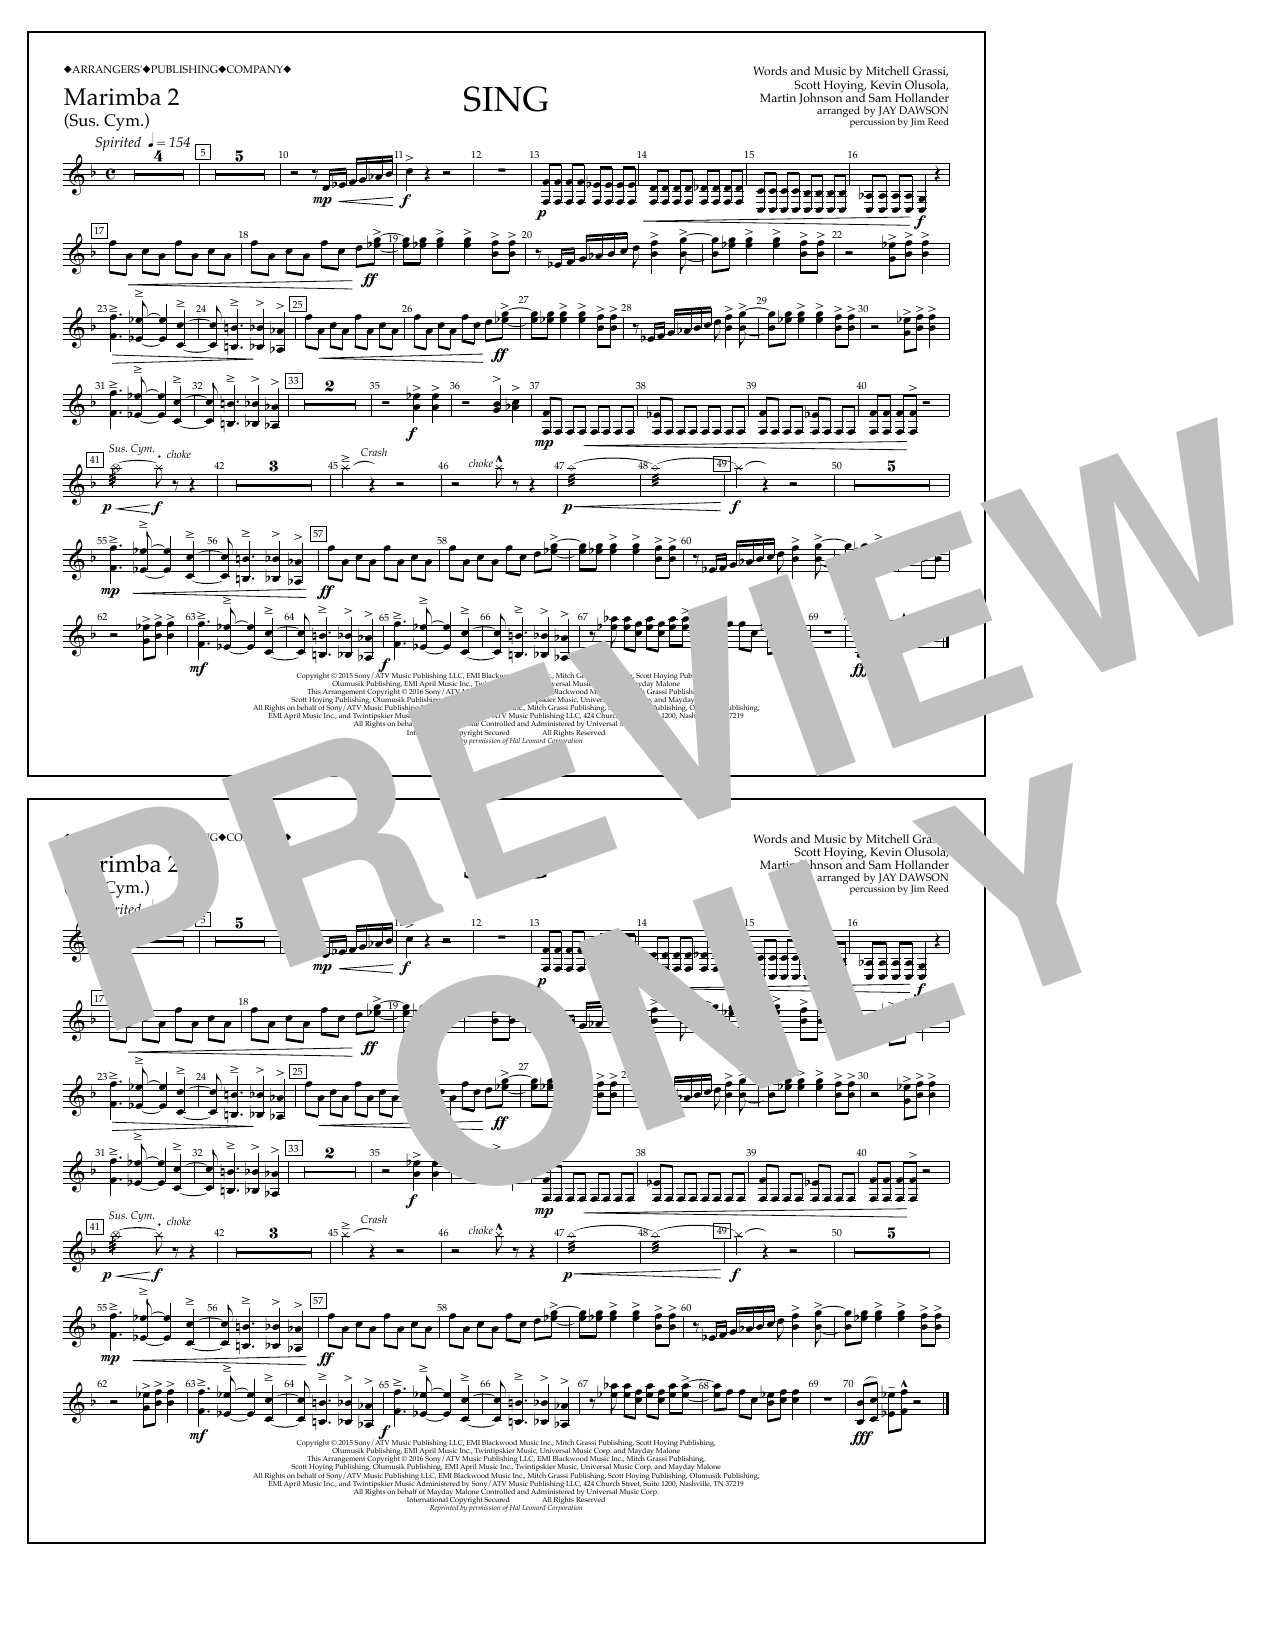 Jay Dawson Sing - Marimba 2 Sheet Music Notes & Chords for Marching Band - Download or Print PDF